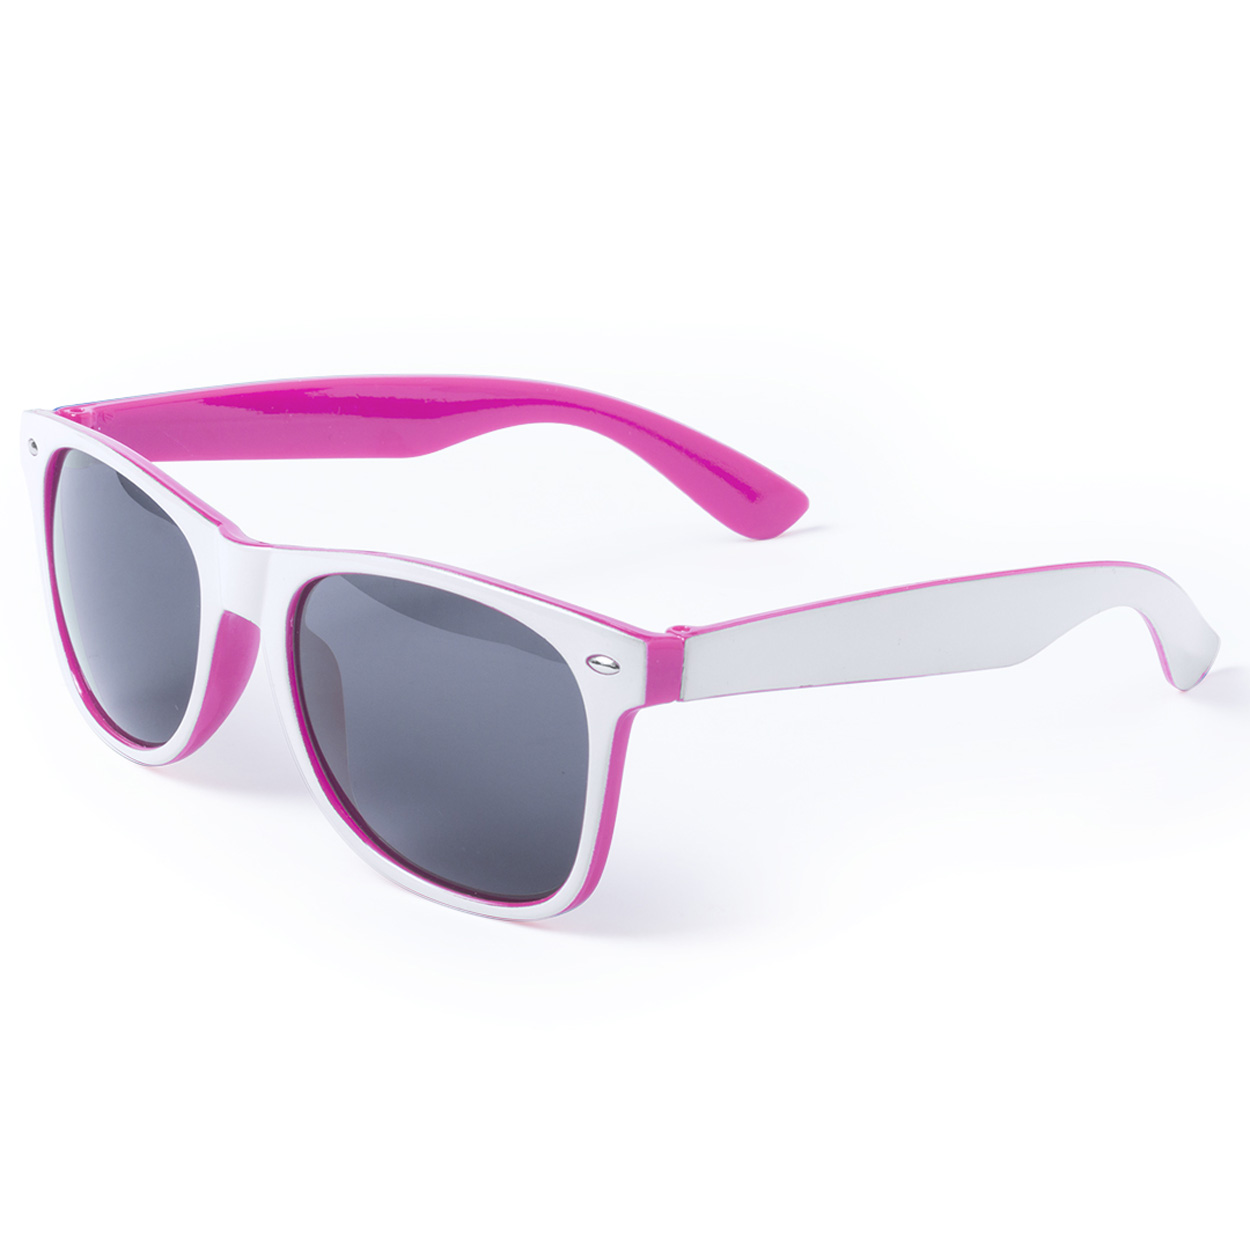 Promo  Saimon sunglasses